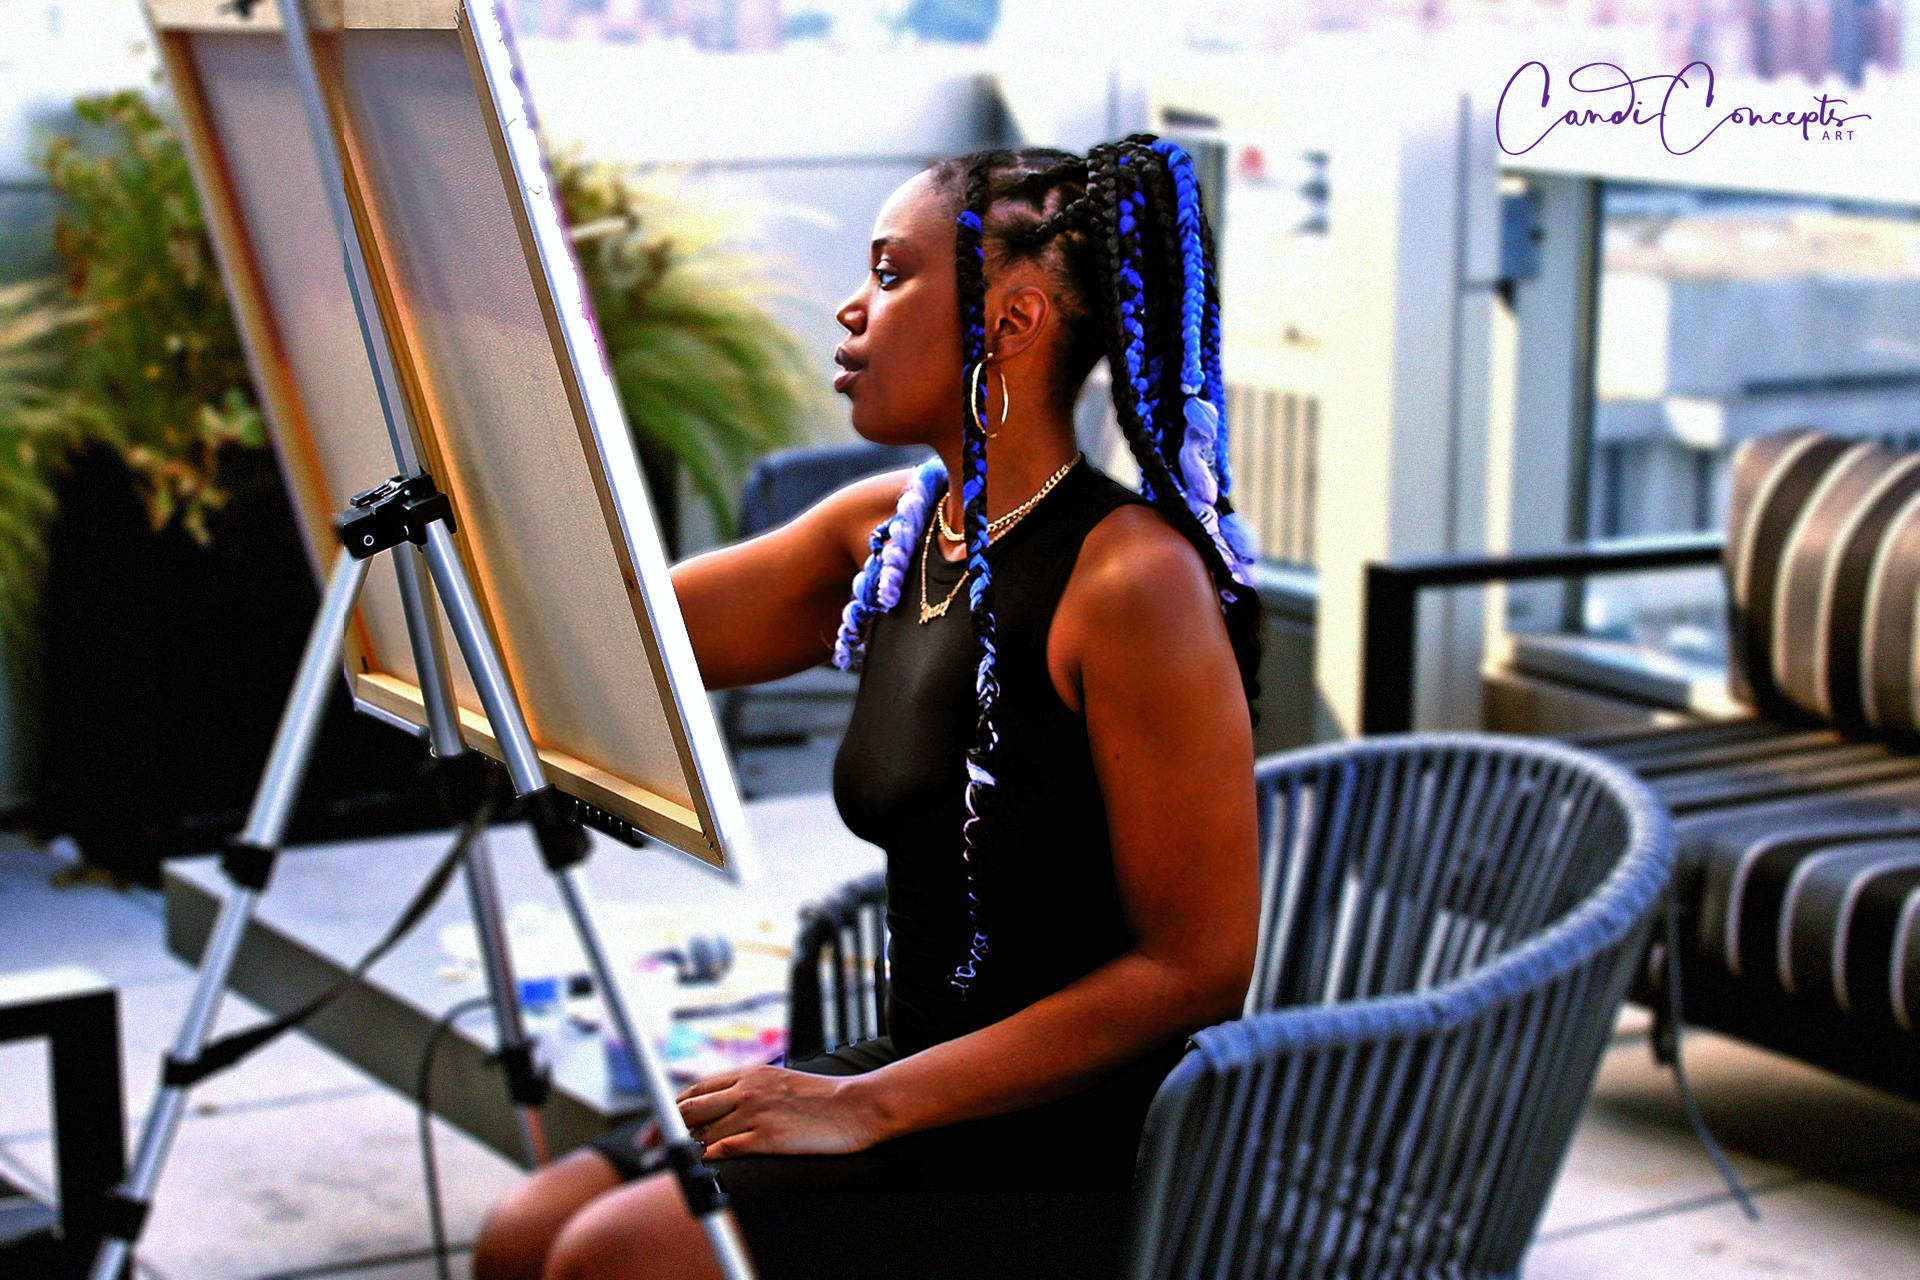 San Antonio Artist and her contribution to Black representation